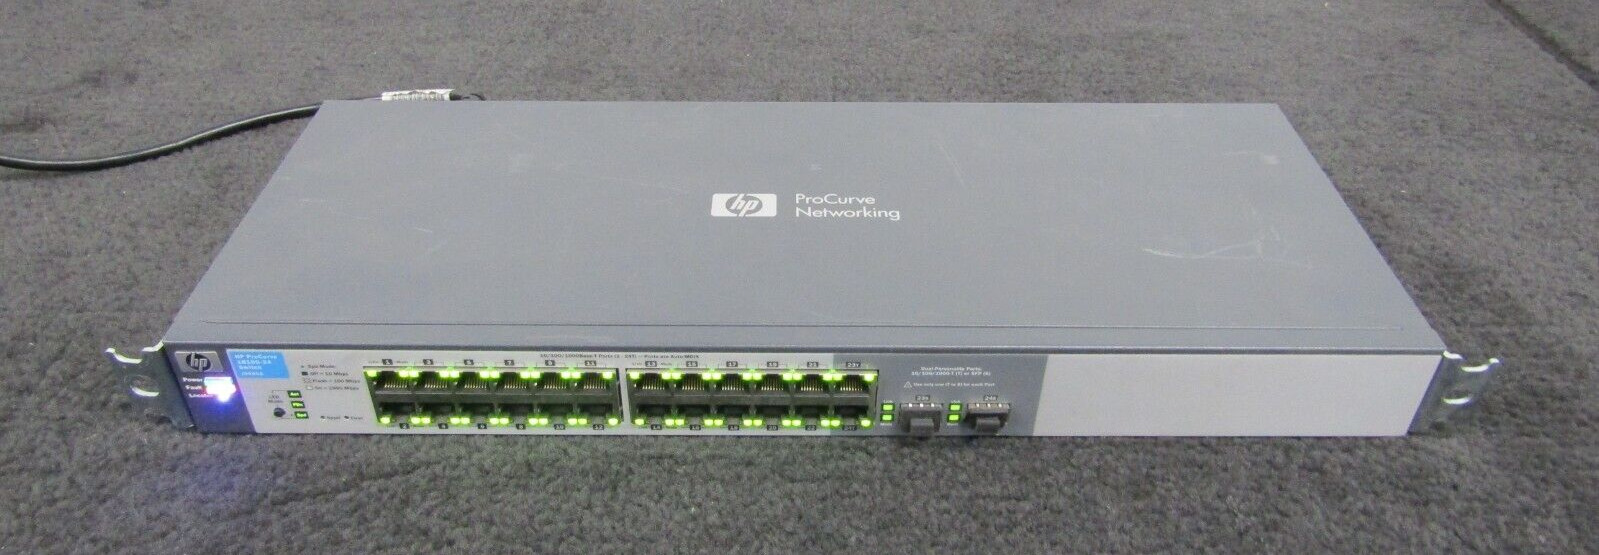 HP  24-Port Gigabit Ethetrnet Network Switch J9450A ProCurve 1810G-24 Switch